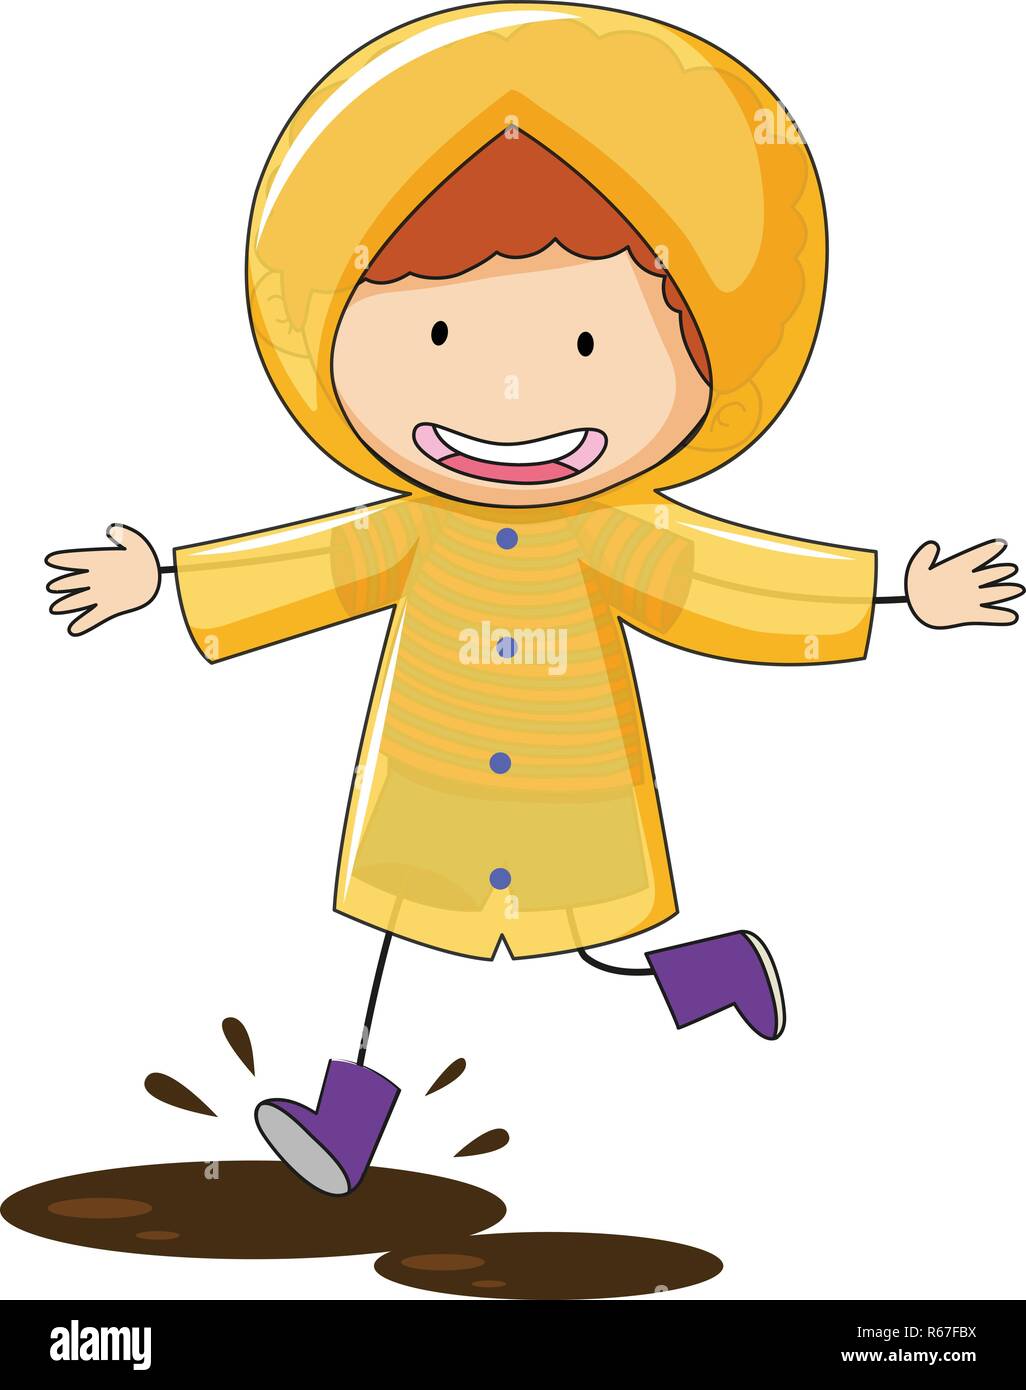 Doodle kid wearing raincoat illustration Stock Vector